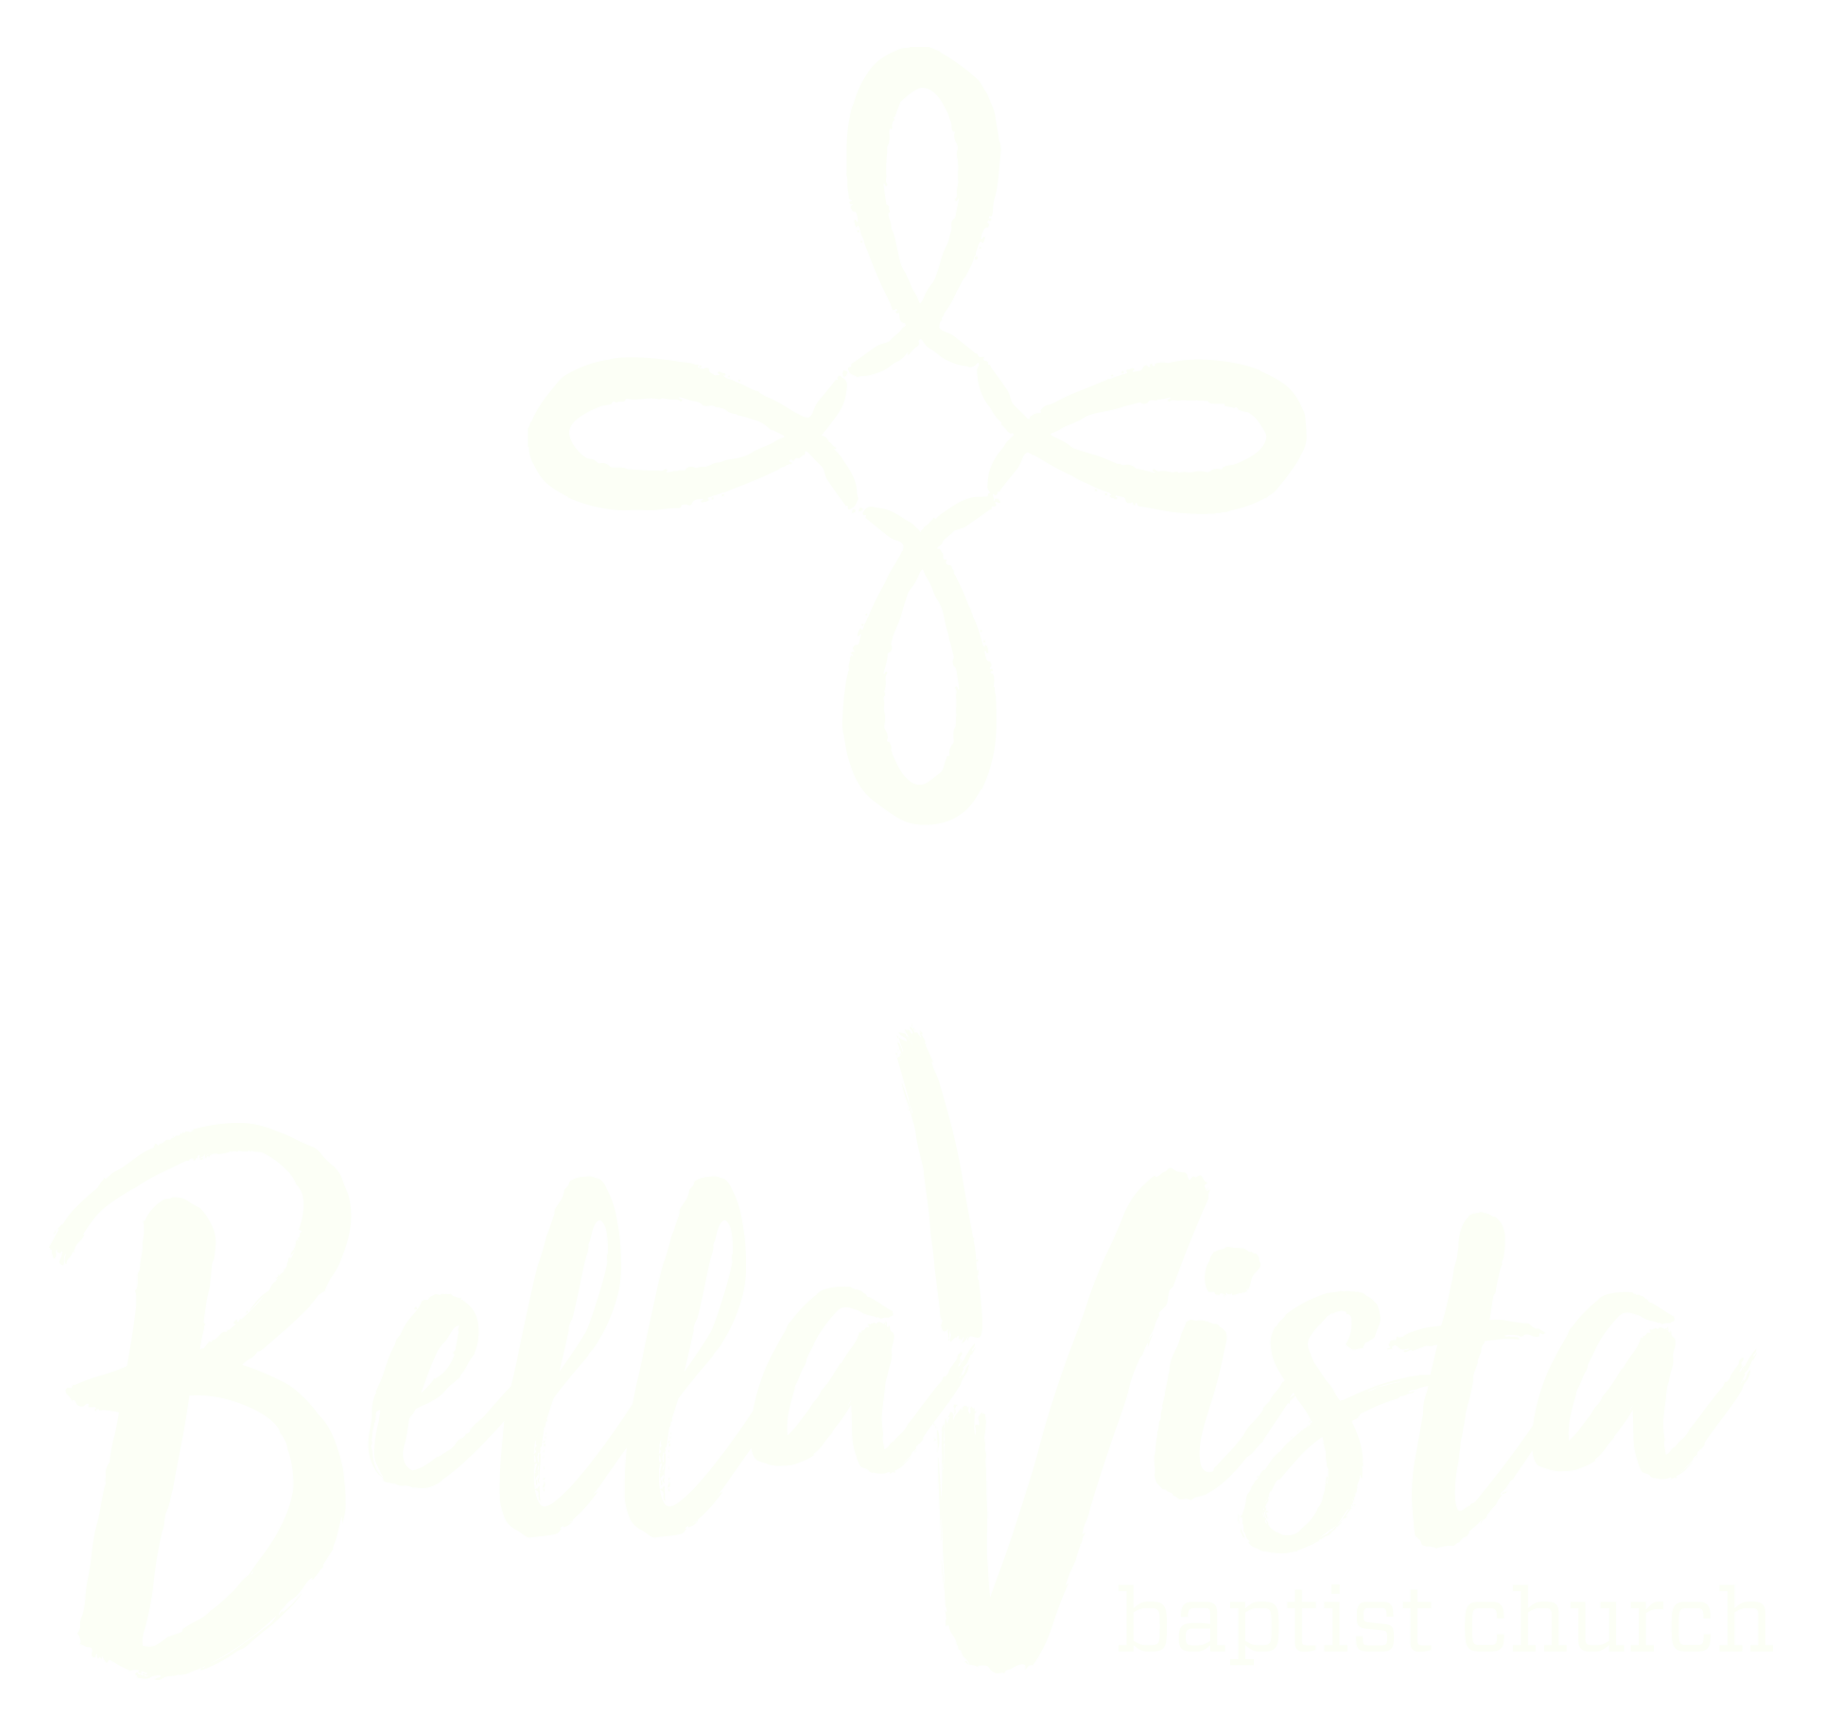 Bella Vista Baptist Church